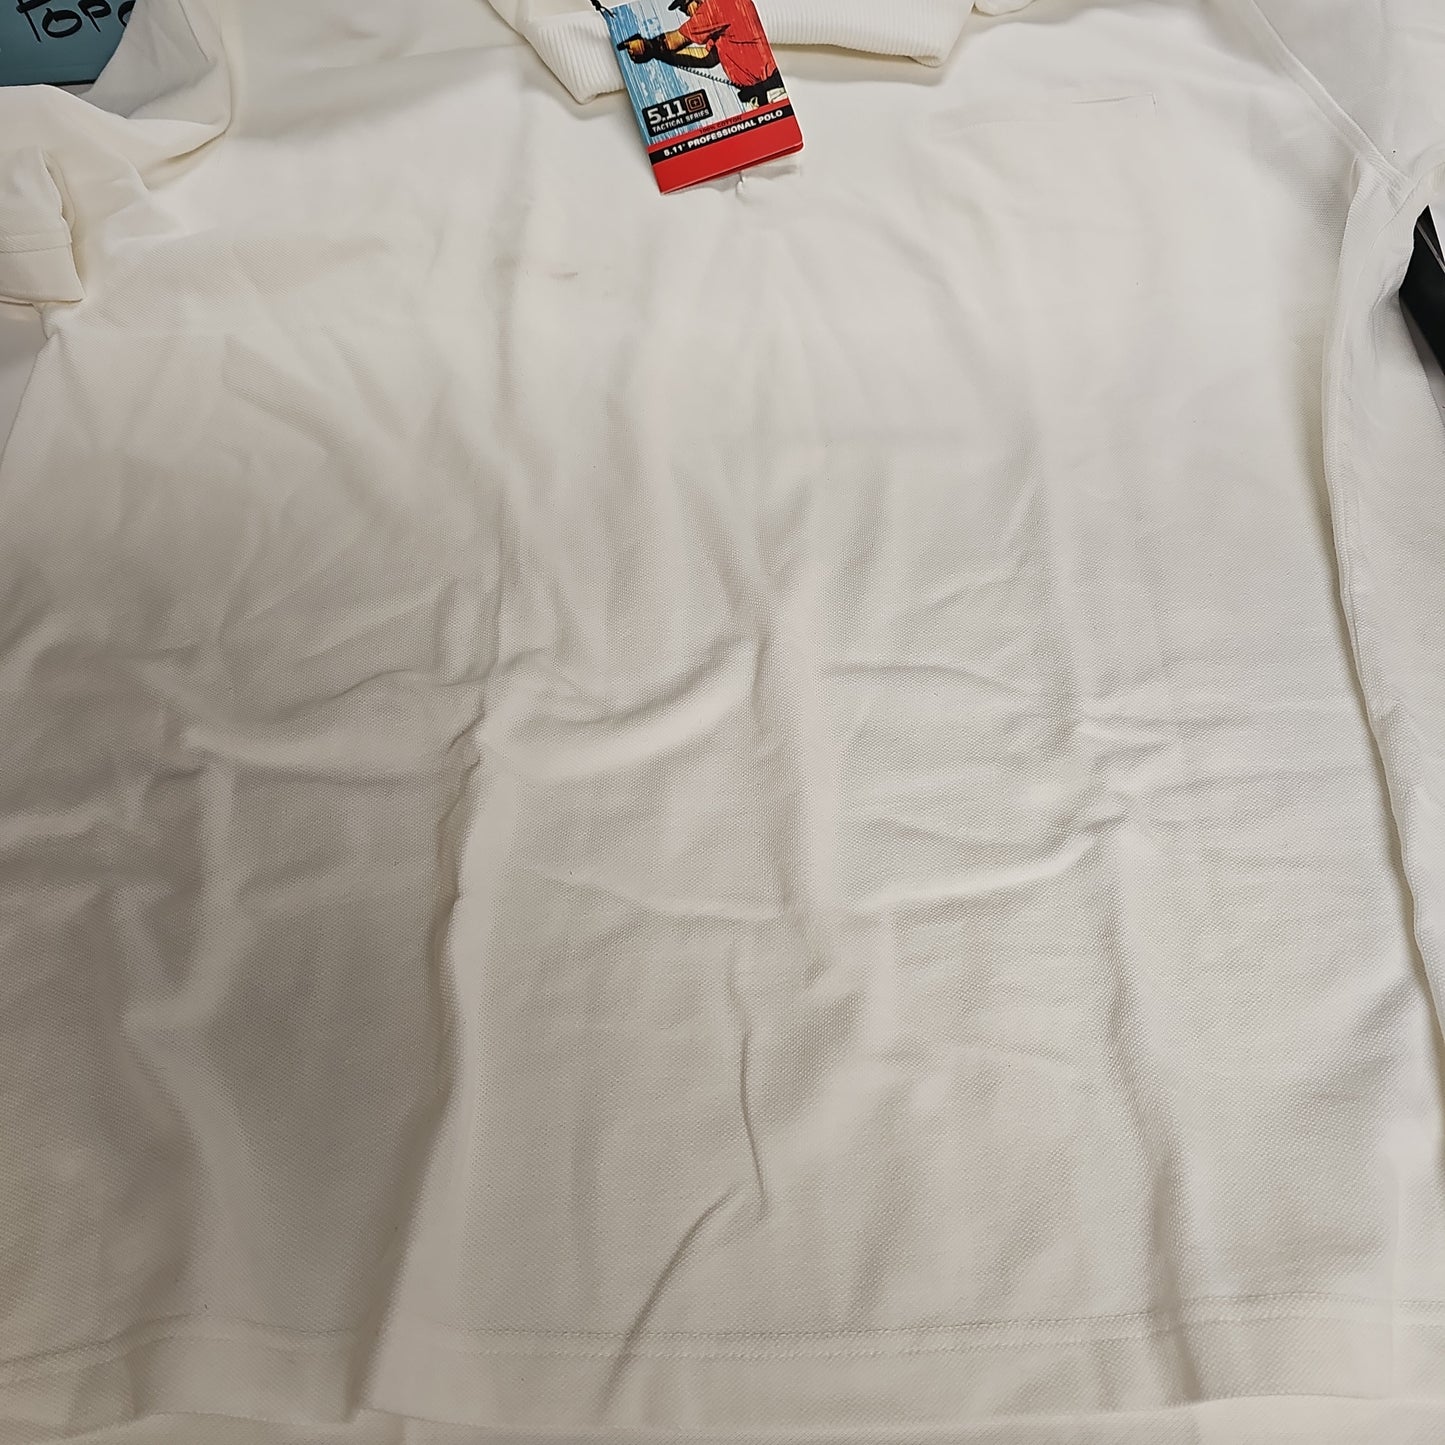 5.11 Tactical Polo Shirt Short Sleeve Professional White 2XL 41060-010-2XL